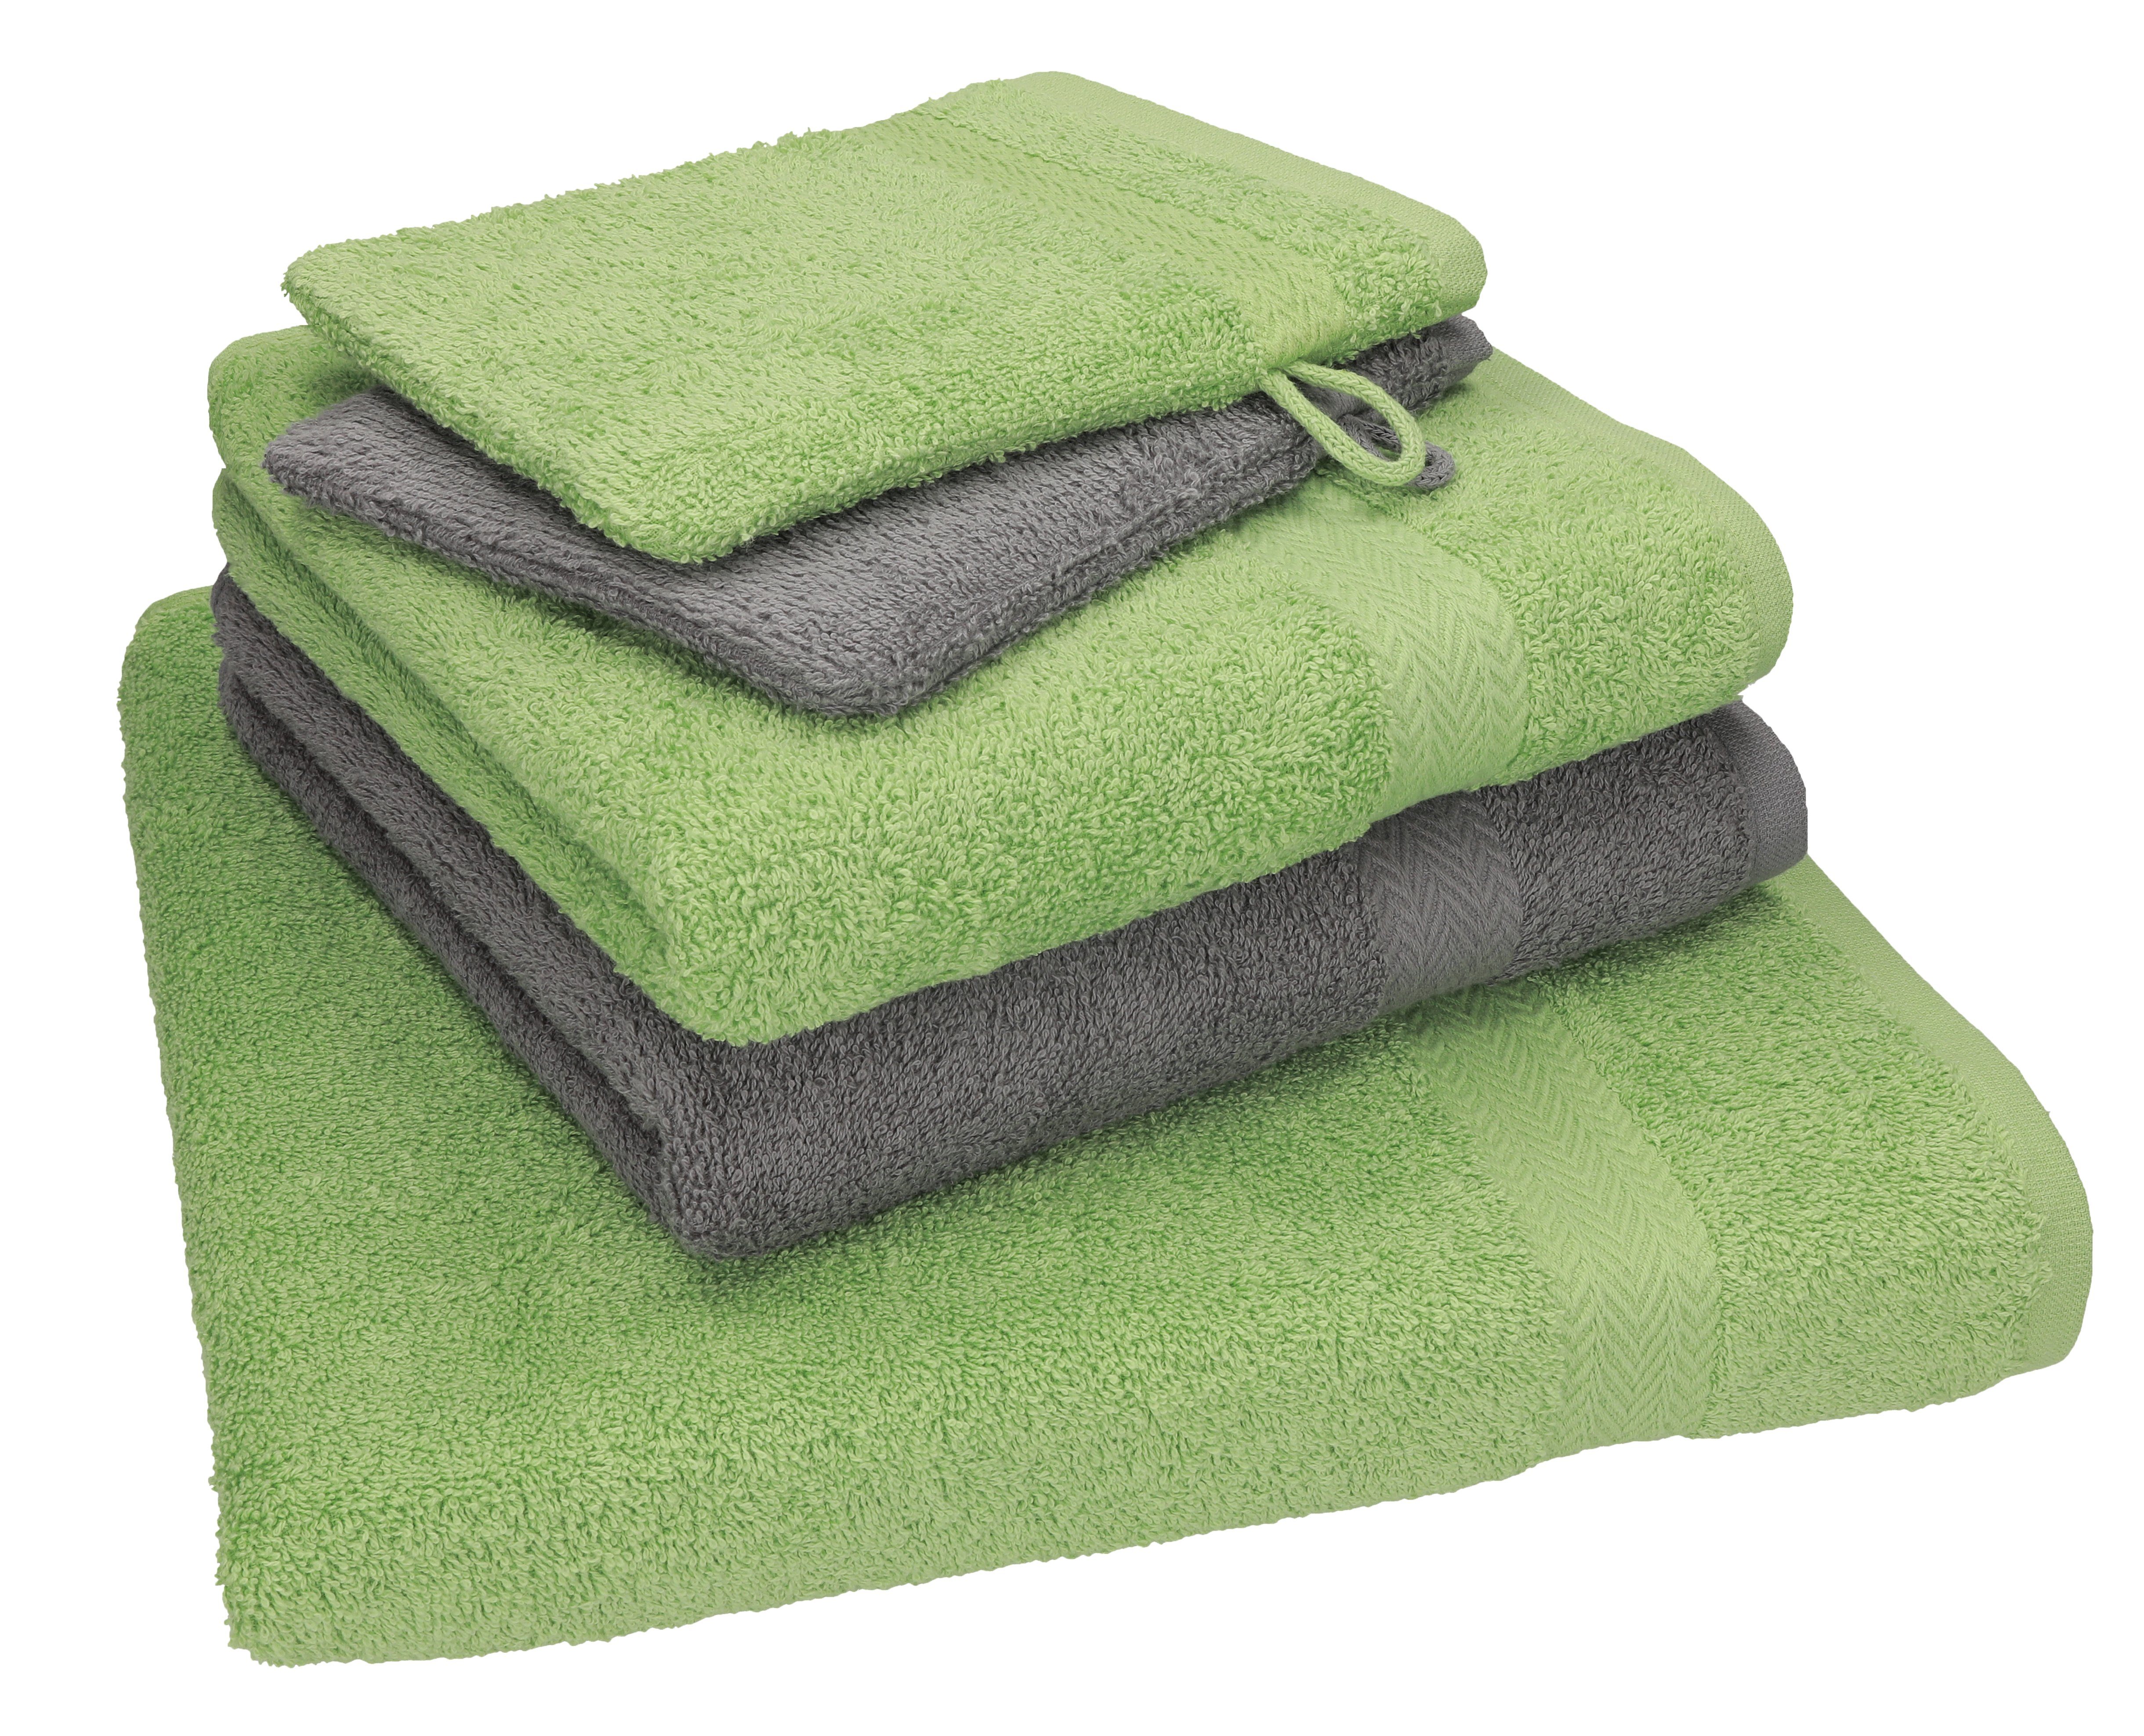 Betz Handtuch Set apfelgrün Baumwolle, 2 2 (5-tlg) 1 Pack Set Single Handtücher 5 Waschhandschuhe, Baumwolle 100% Handtuch Betz Duschtuch TLG